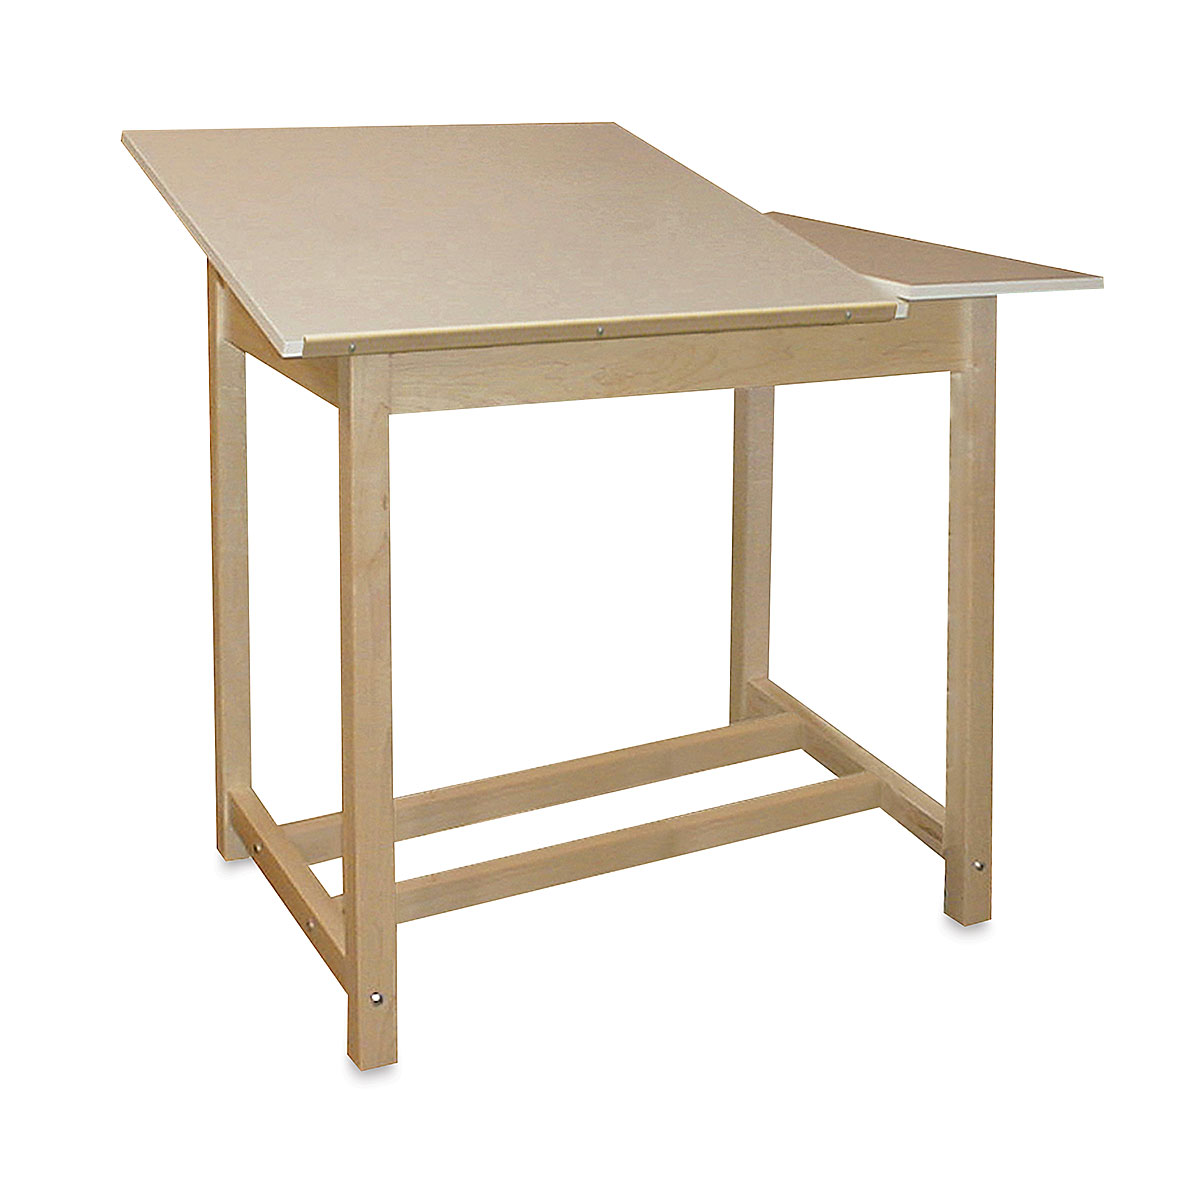 Blick Portable Tabletop Drafting Board - furniture - by owner - sale -  craigslist